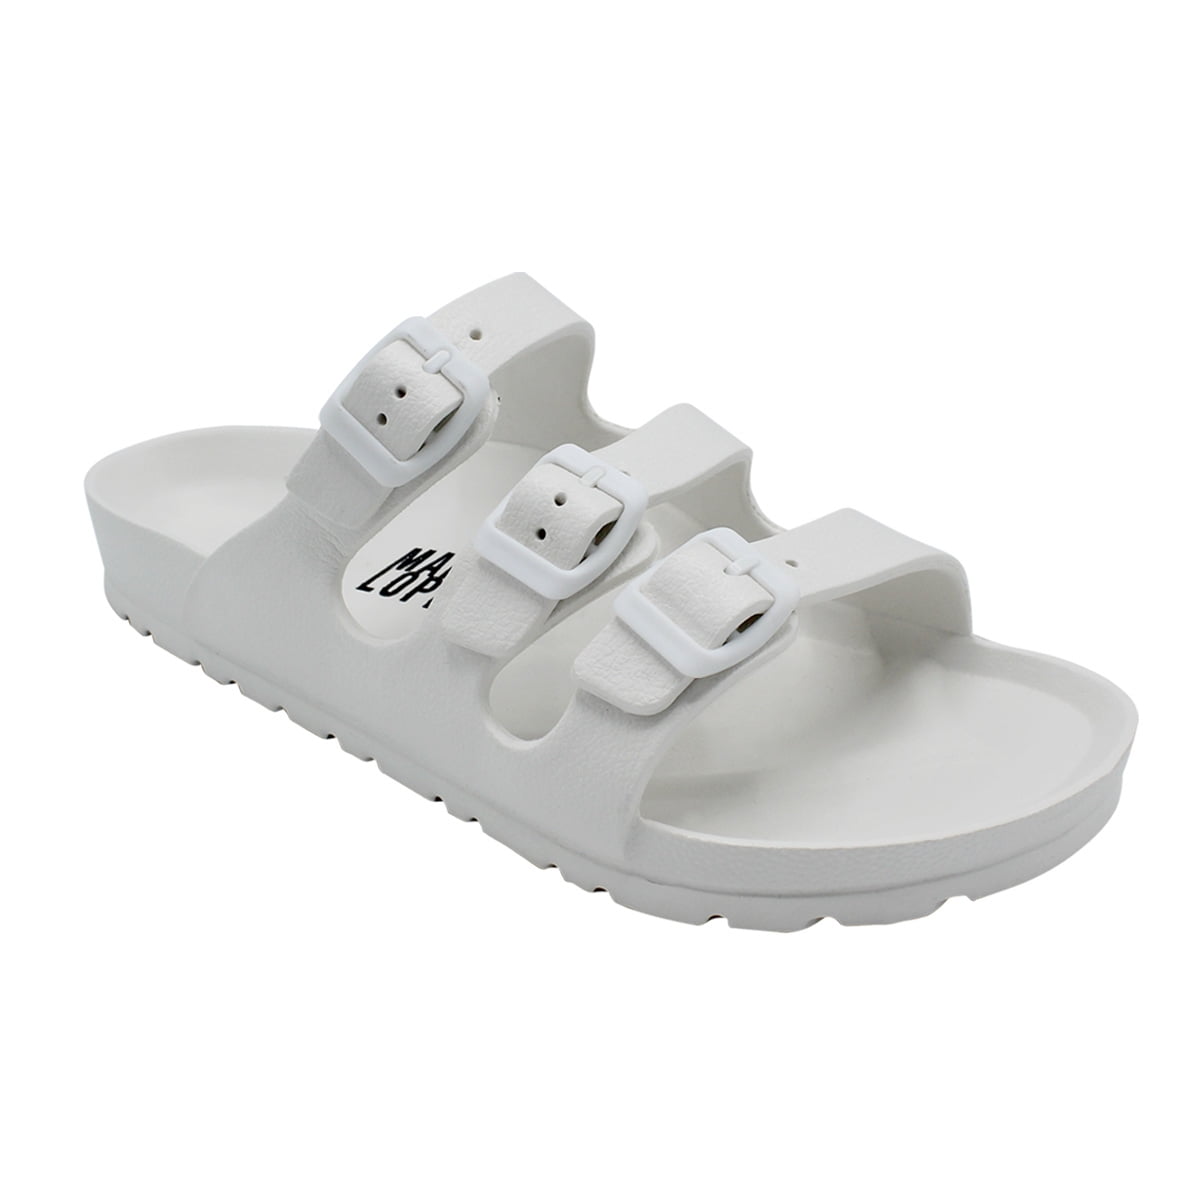 double strap sandals white